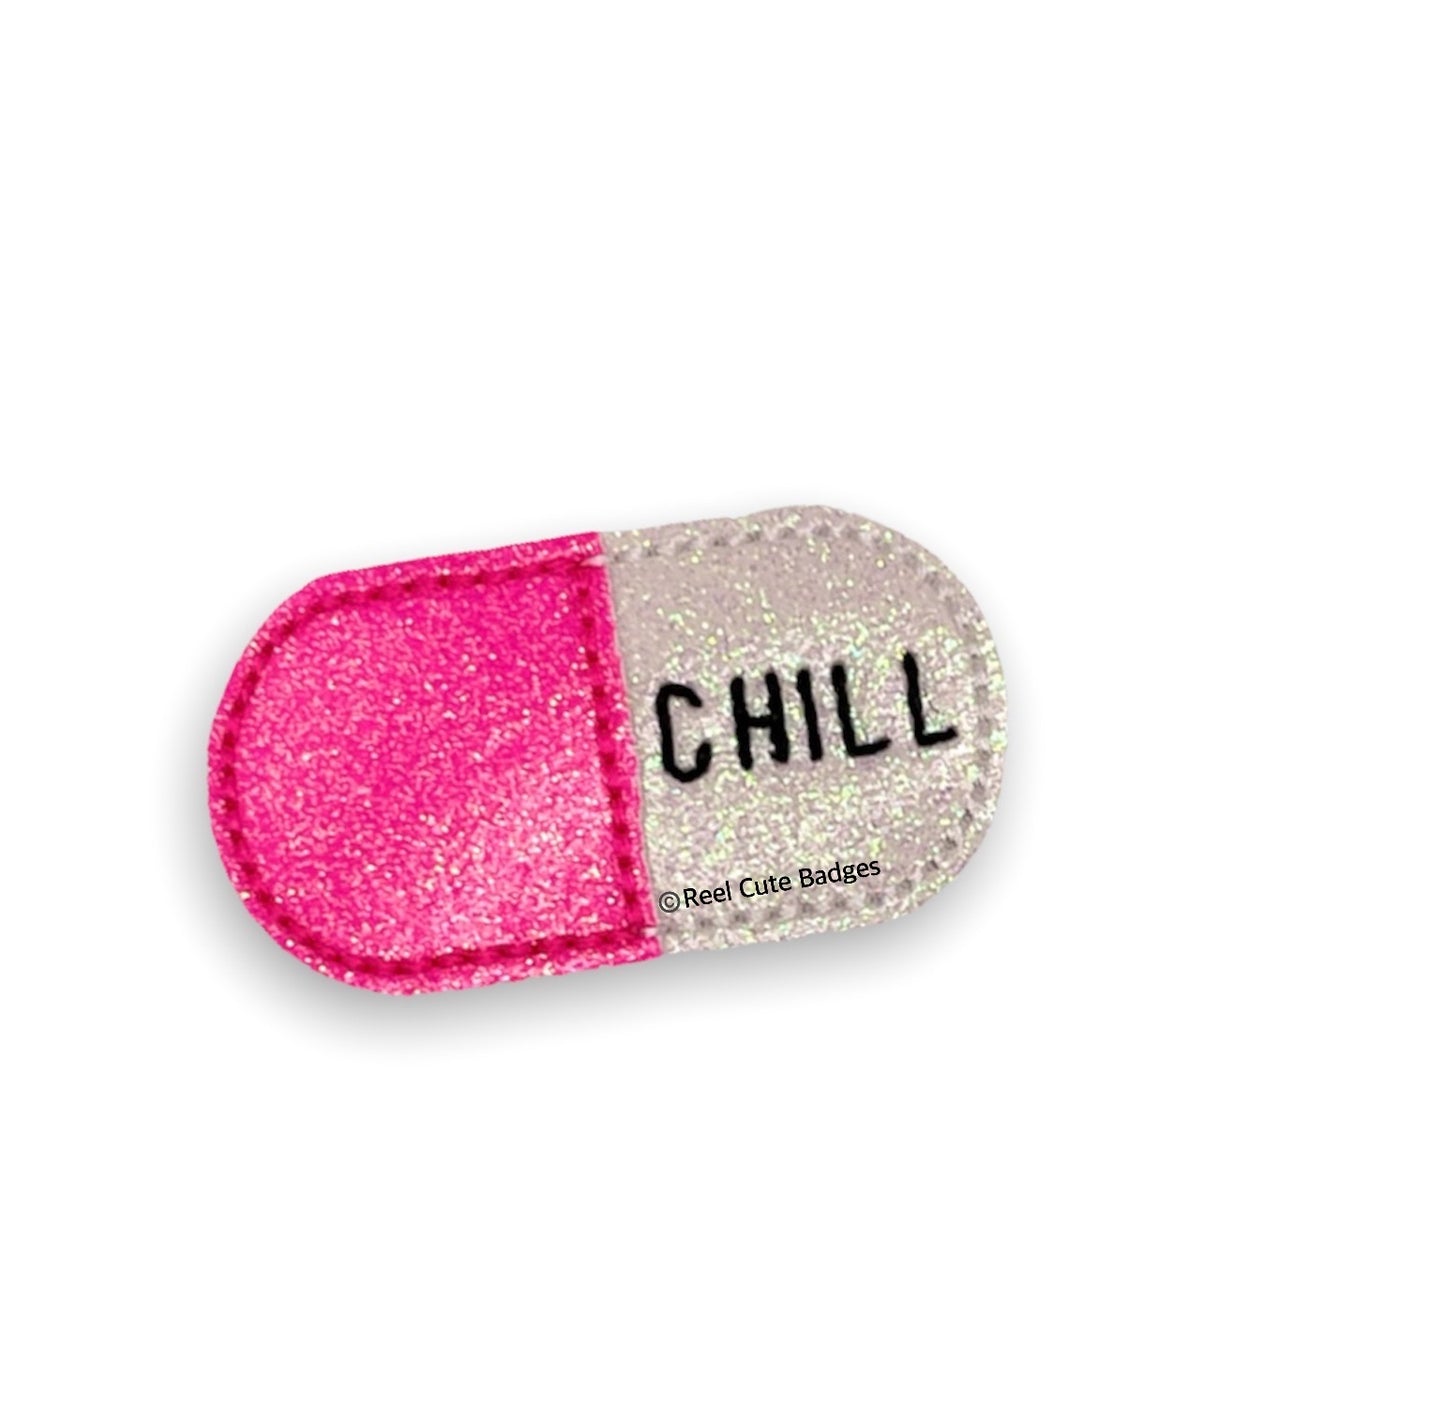 Take a Chill Pill